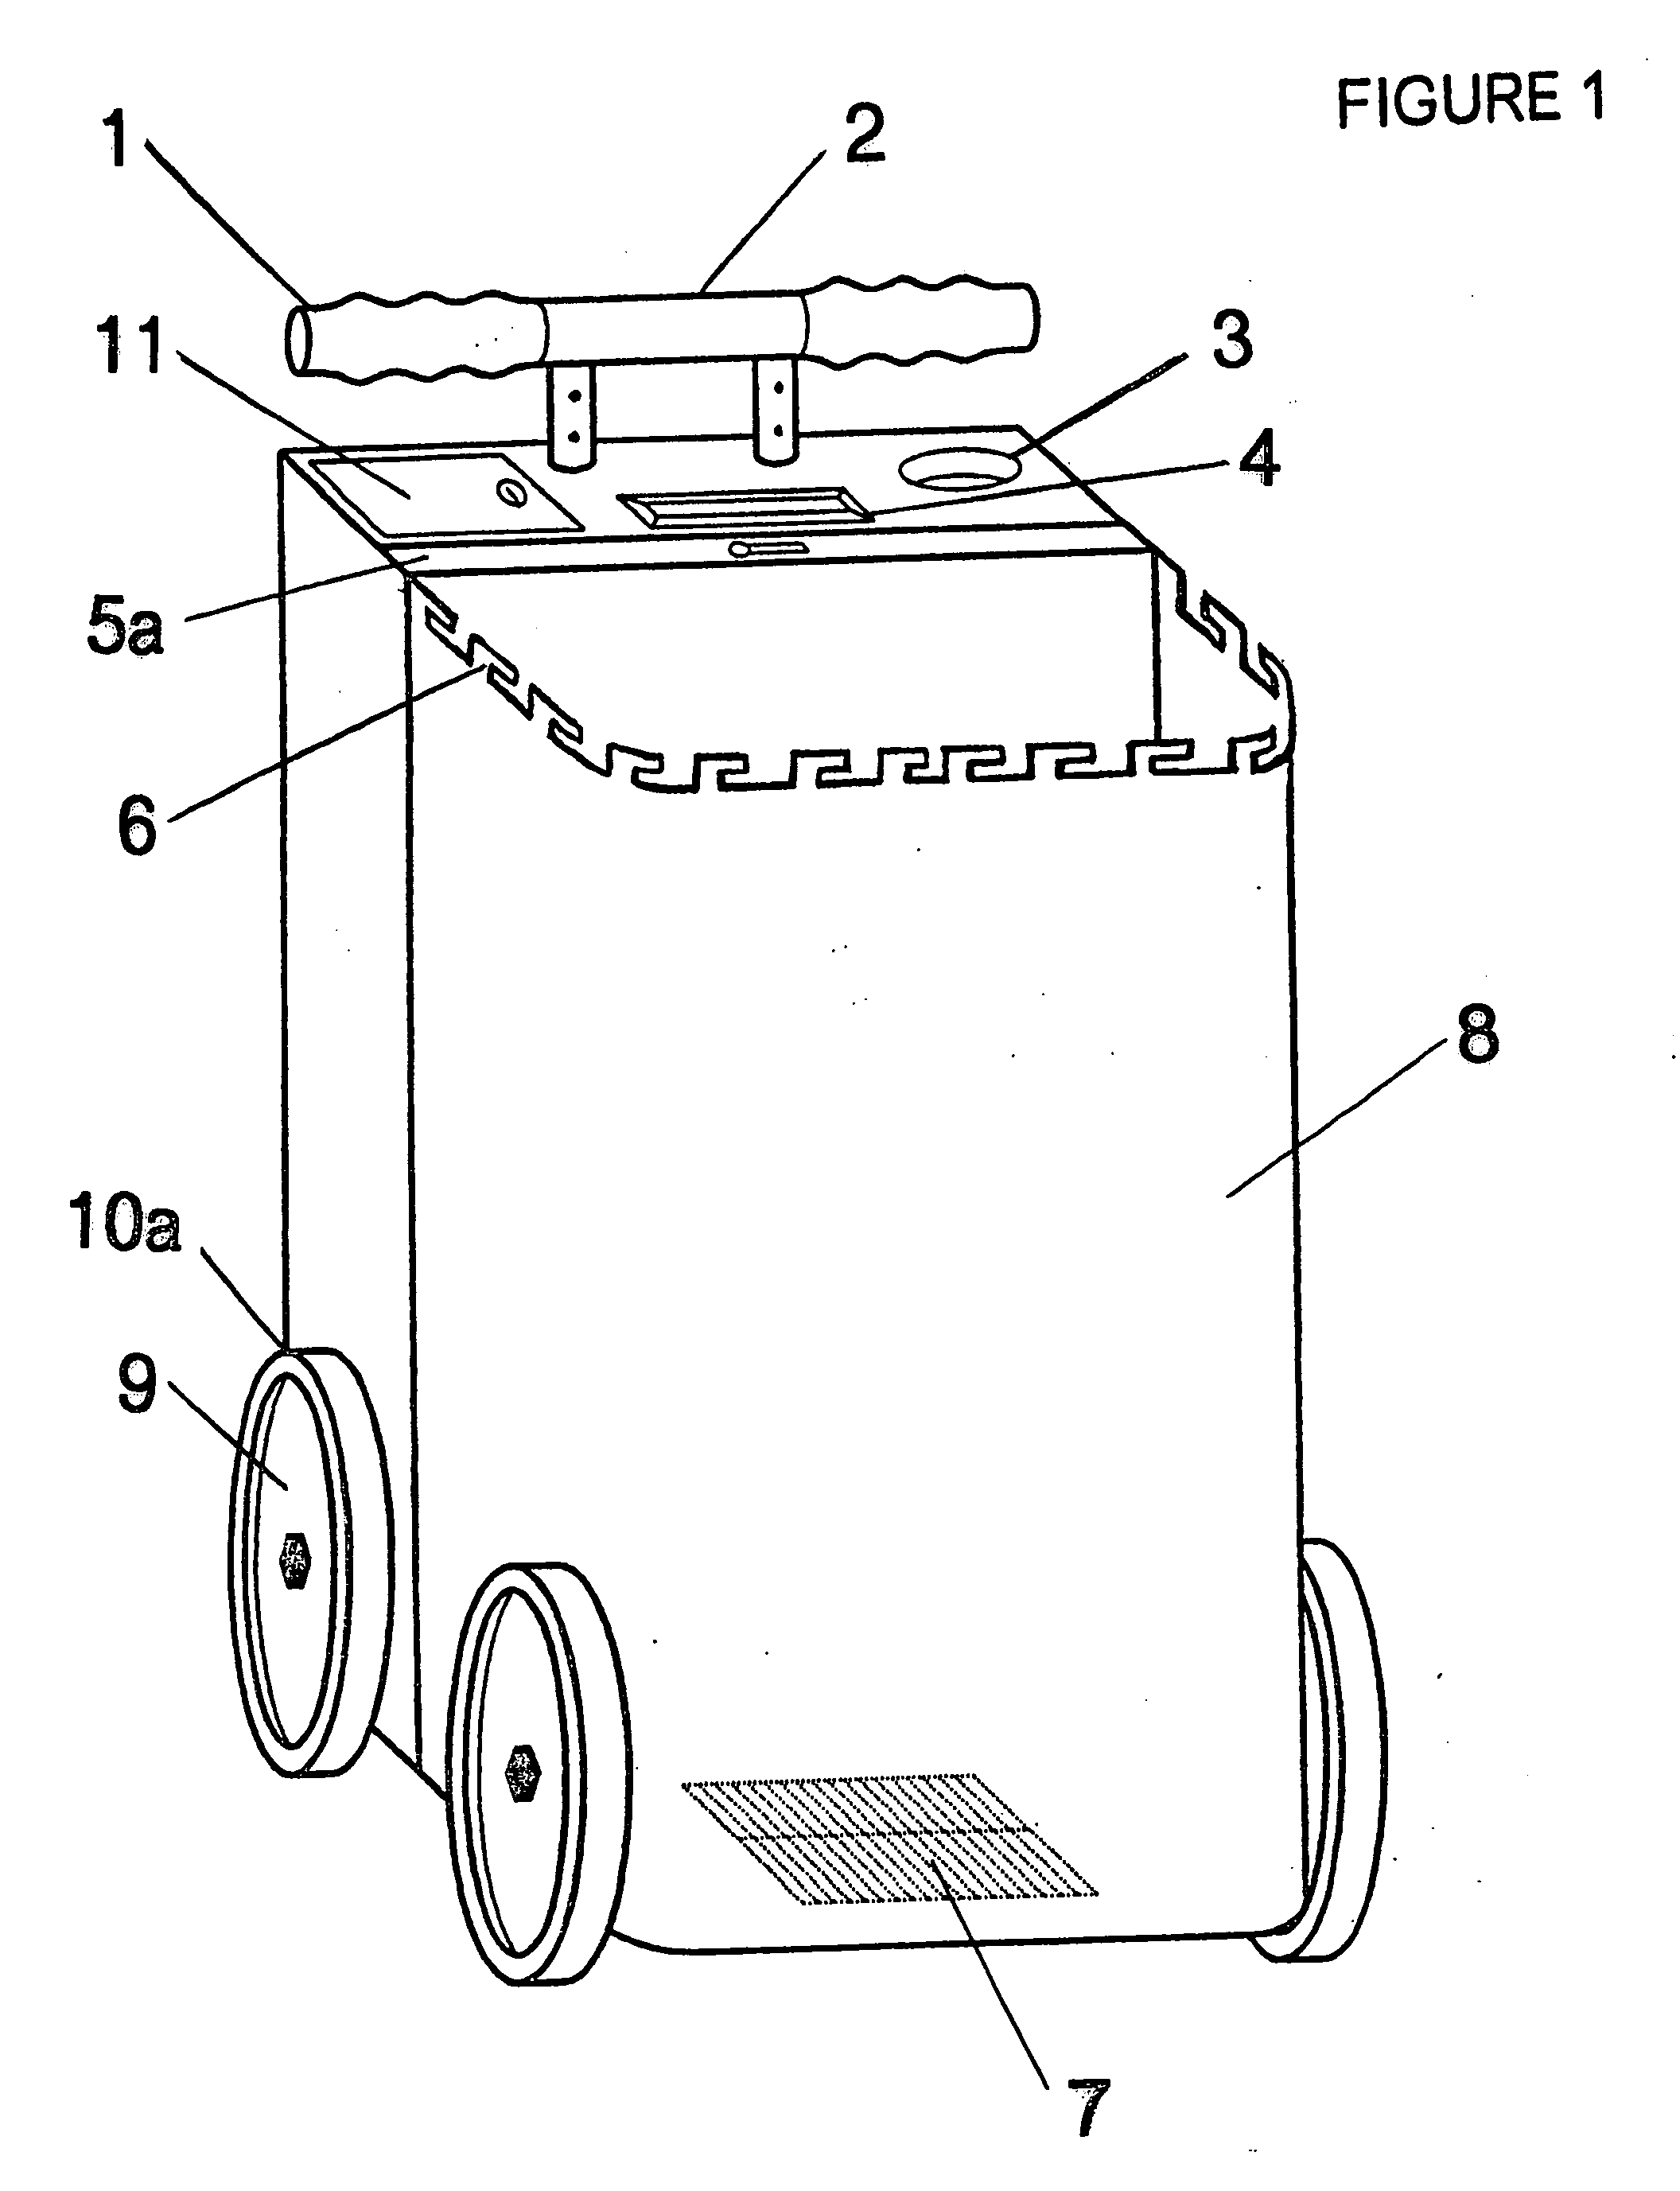 Compactable Utility Laundry Pushcart